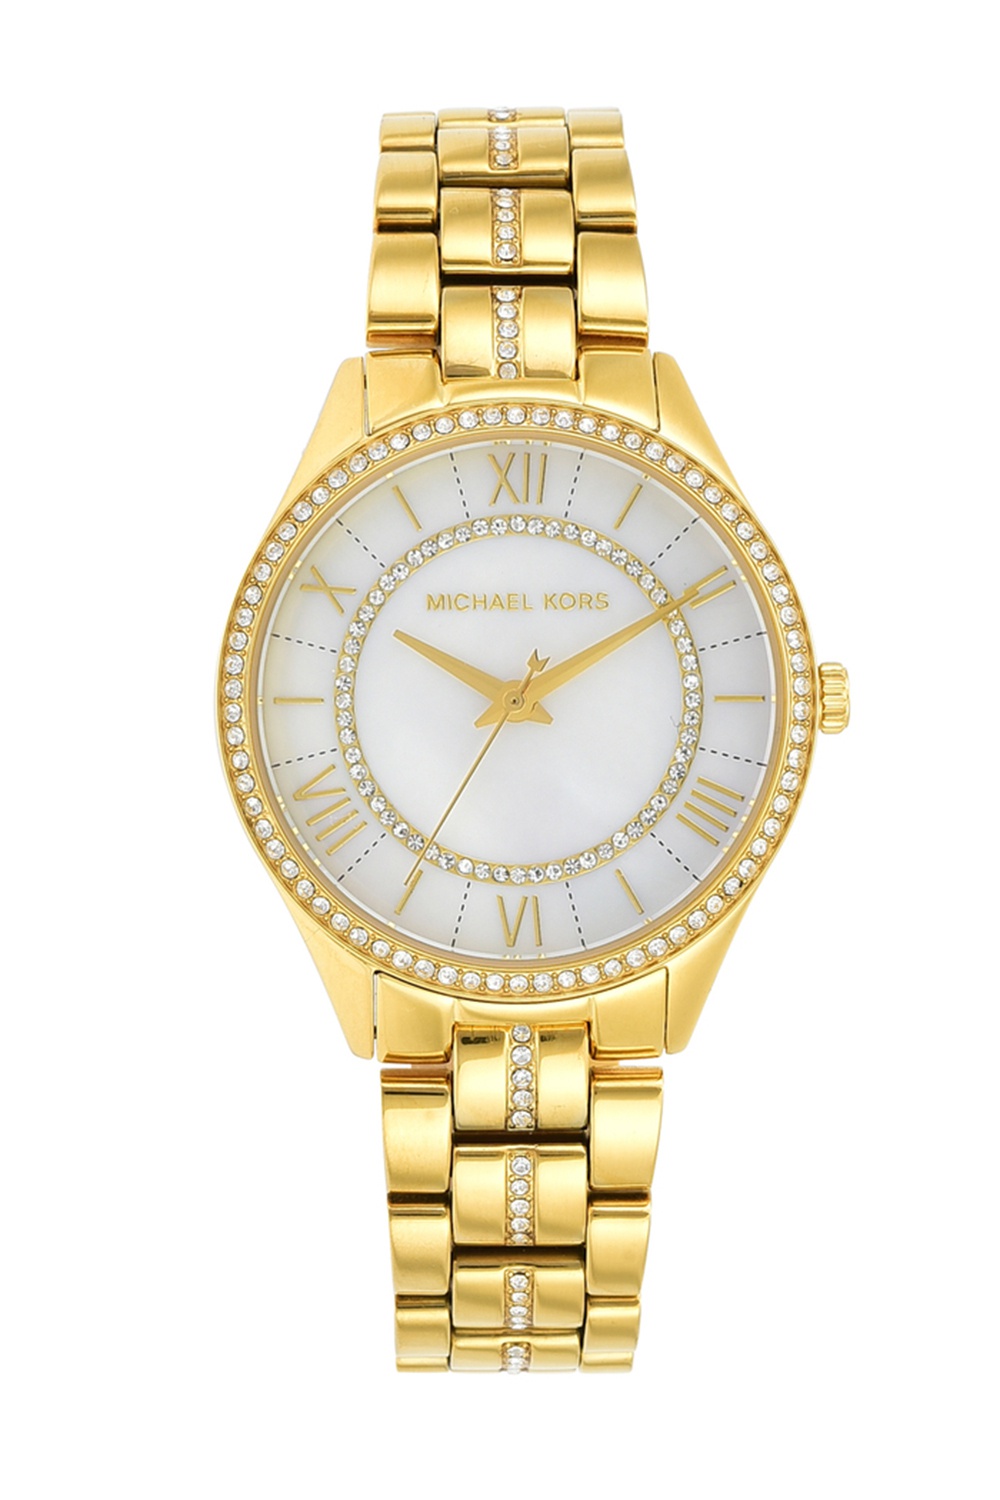 Michael Kors Lauryn Rose Gold Stainless Steel Watch | Odel.lk